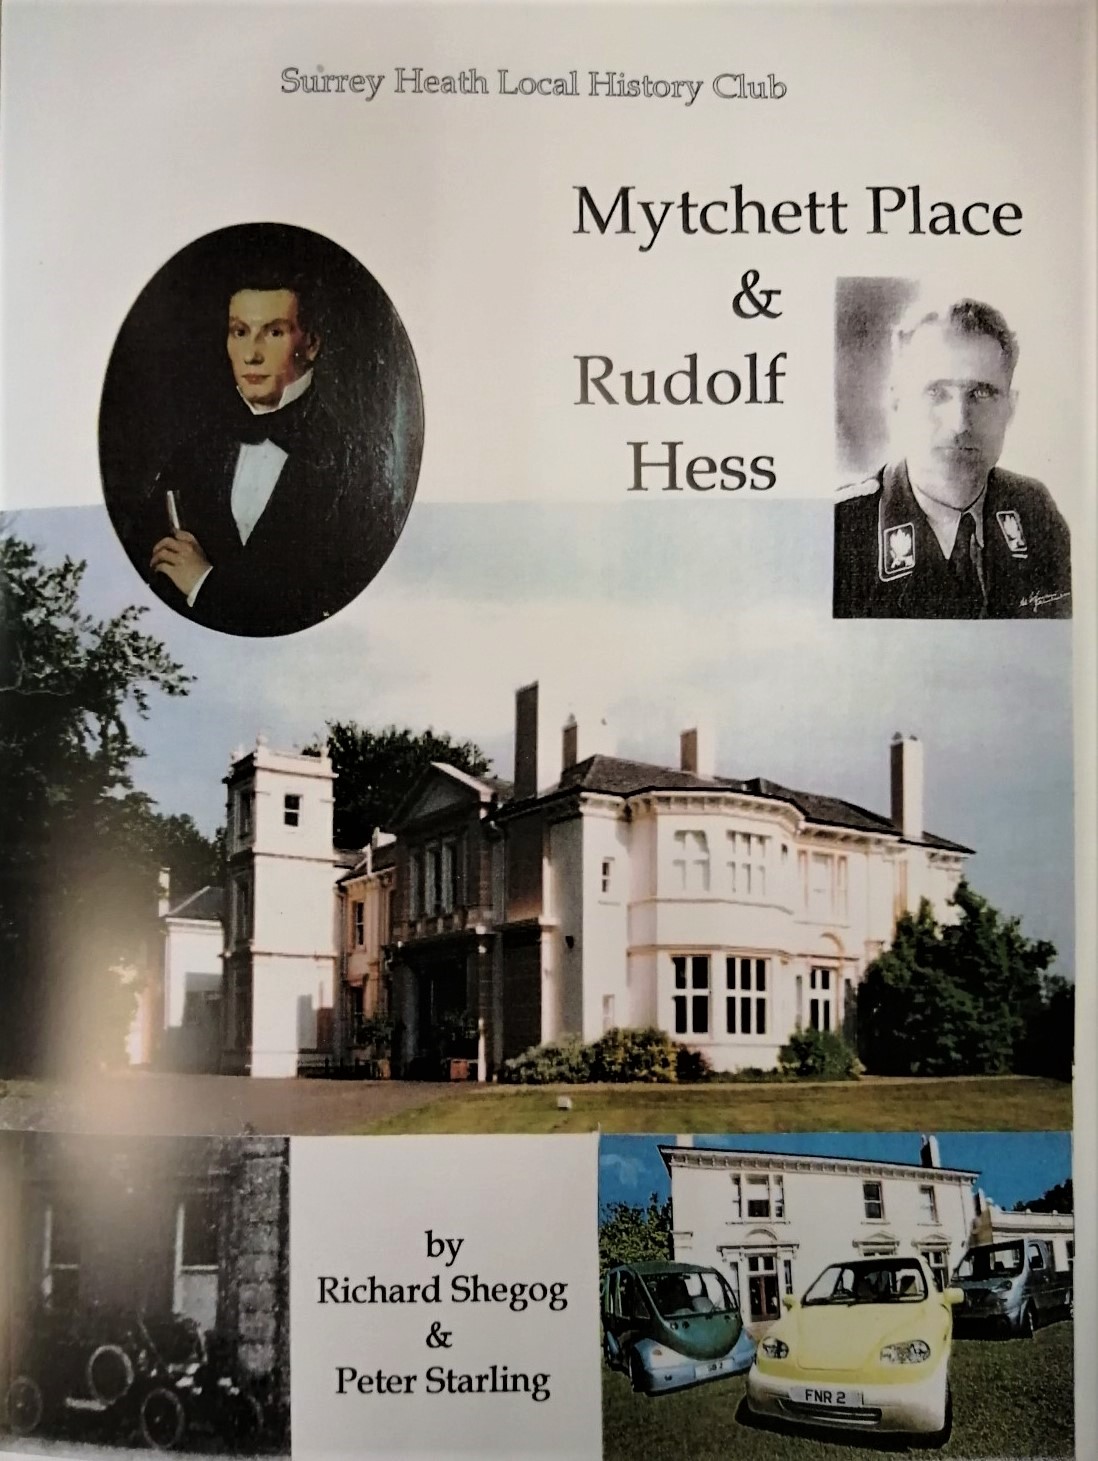 MYTCHETT PLACE AND RUDOLPH HESS